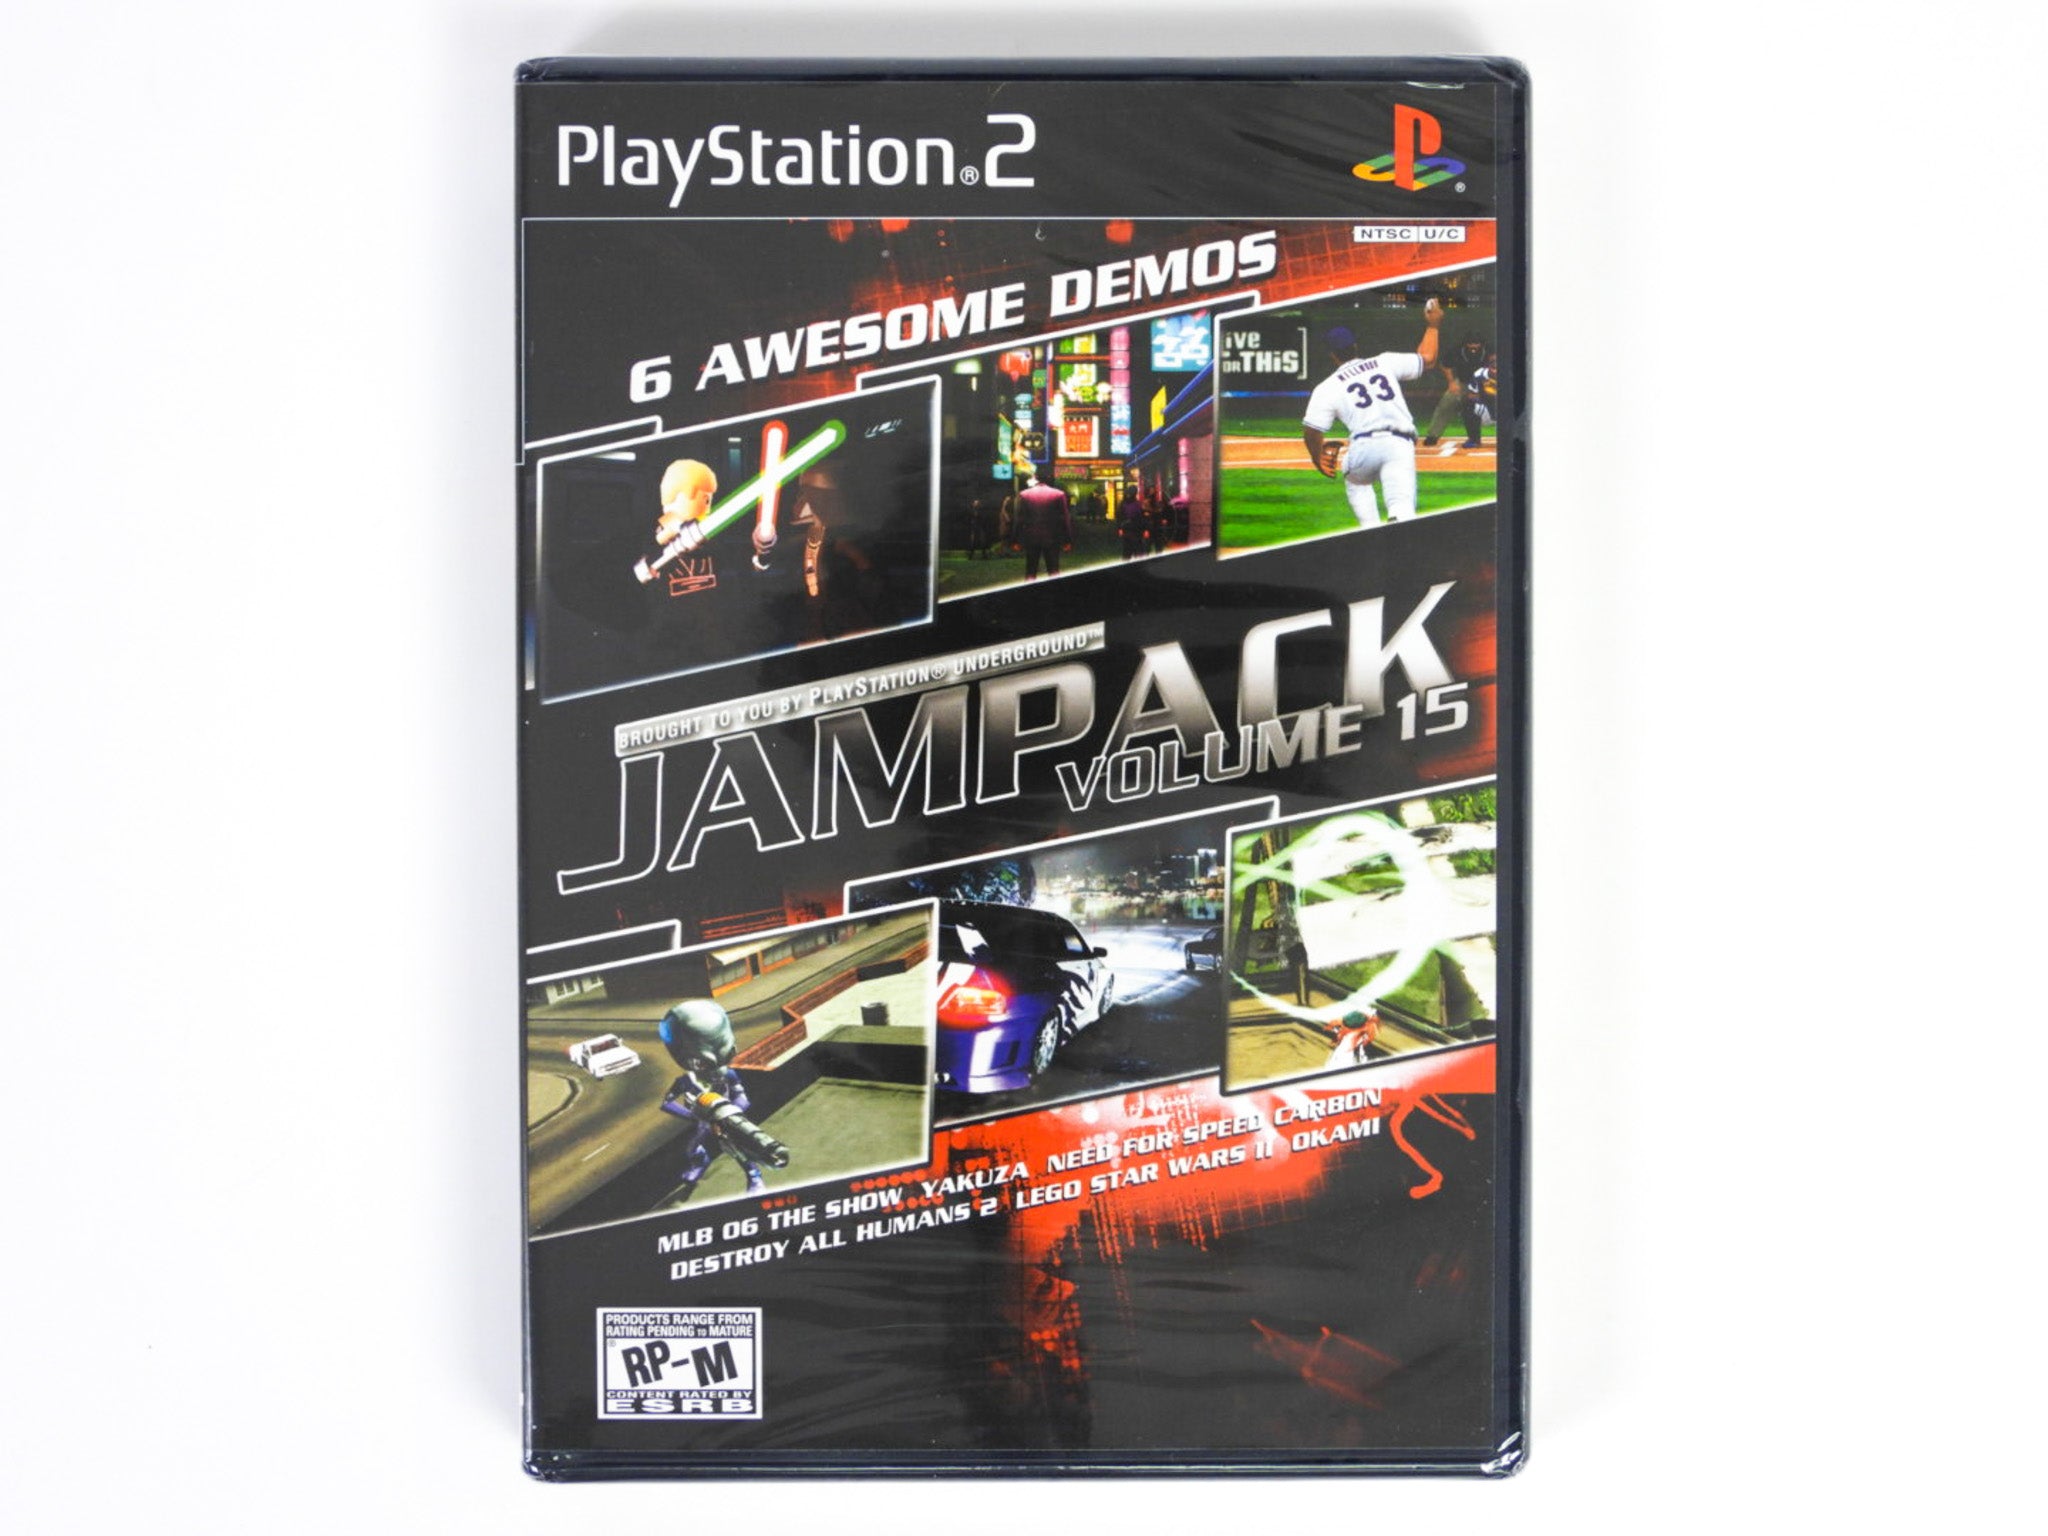 Vol. 15 Jampack Demo Disc Playstation Underground PS2 RP-T Teen